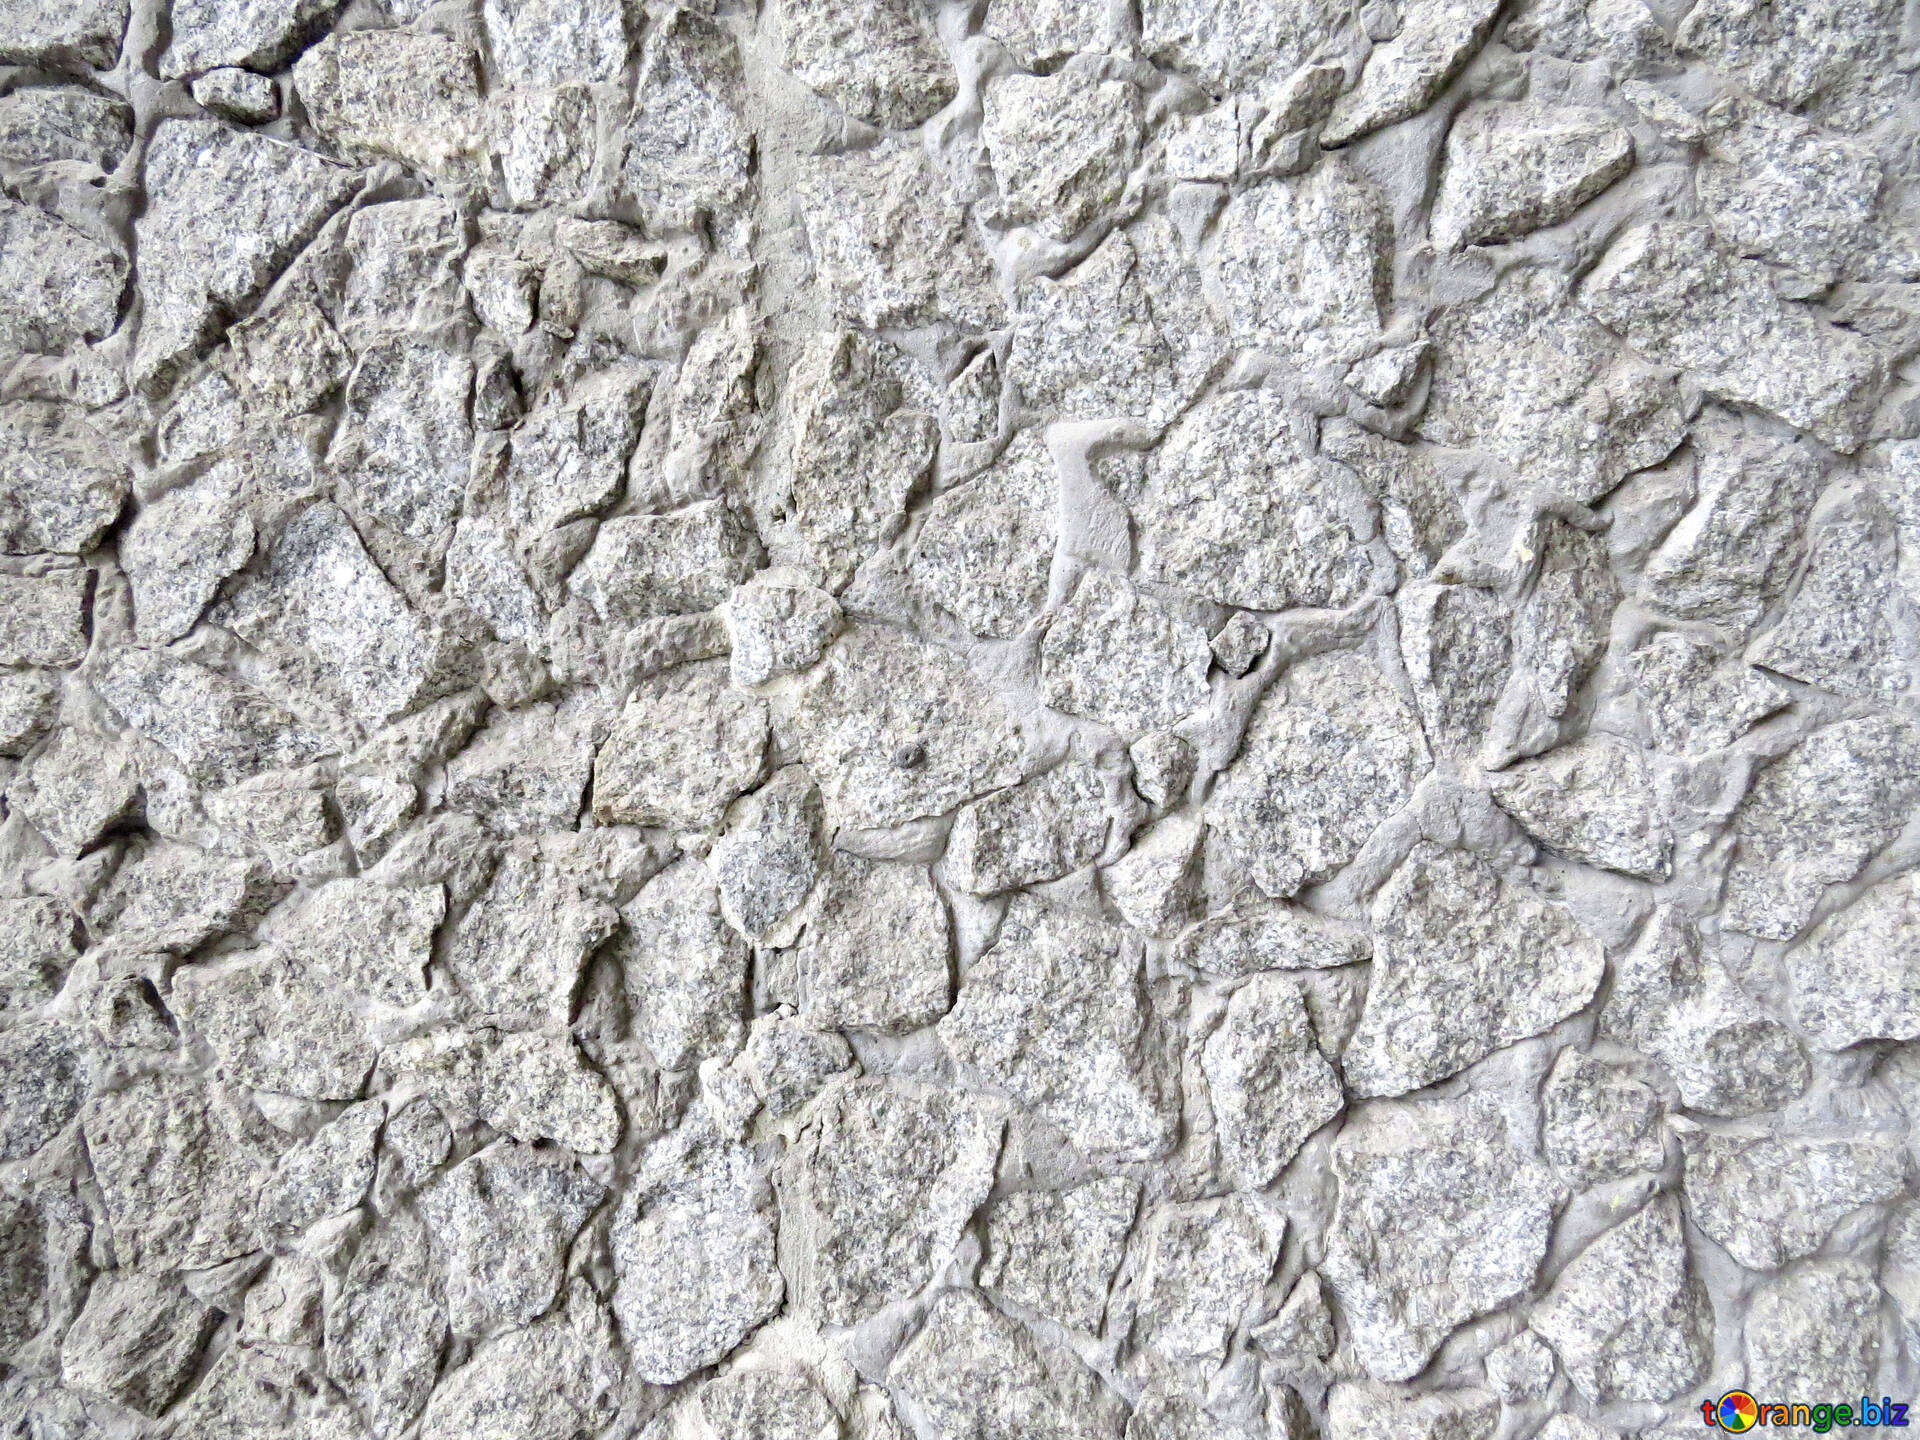  Textures  masonry rock  texture  rock   52361